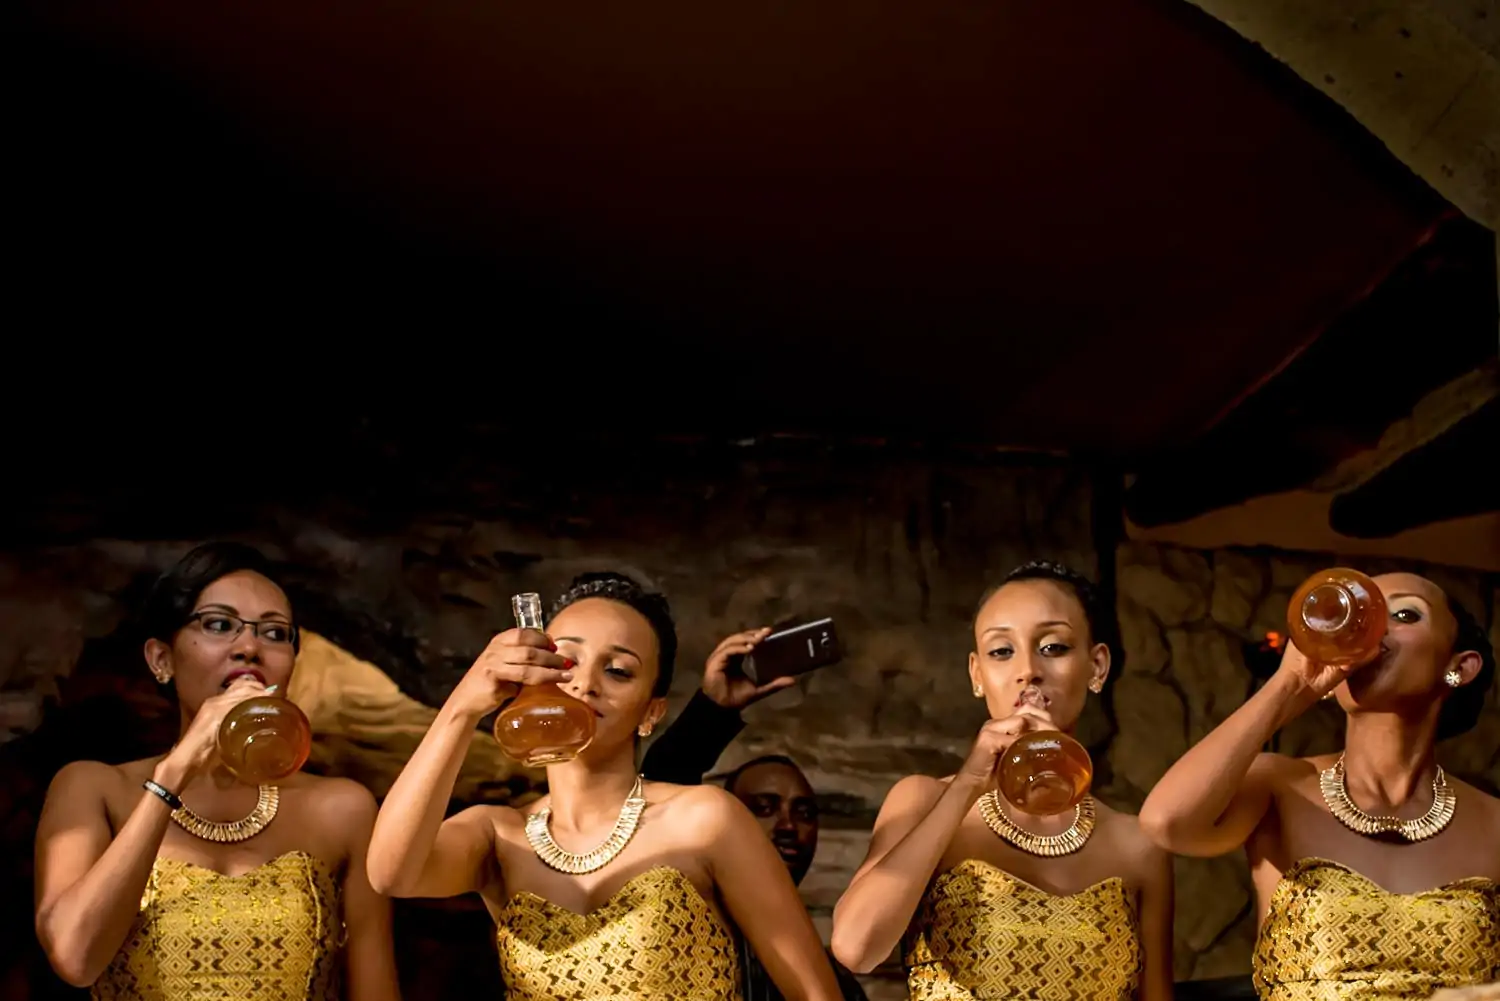 Ethiopian bridesmaids drinking honey wine at the wedding